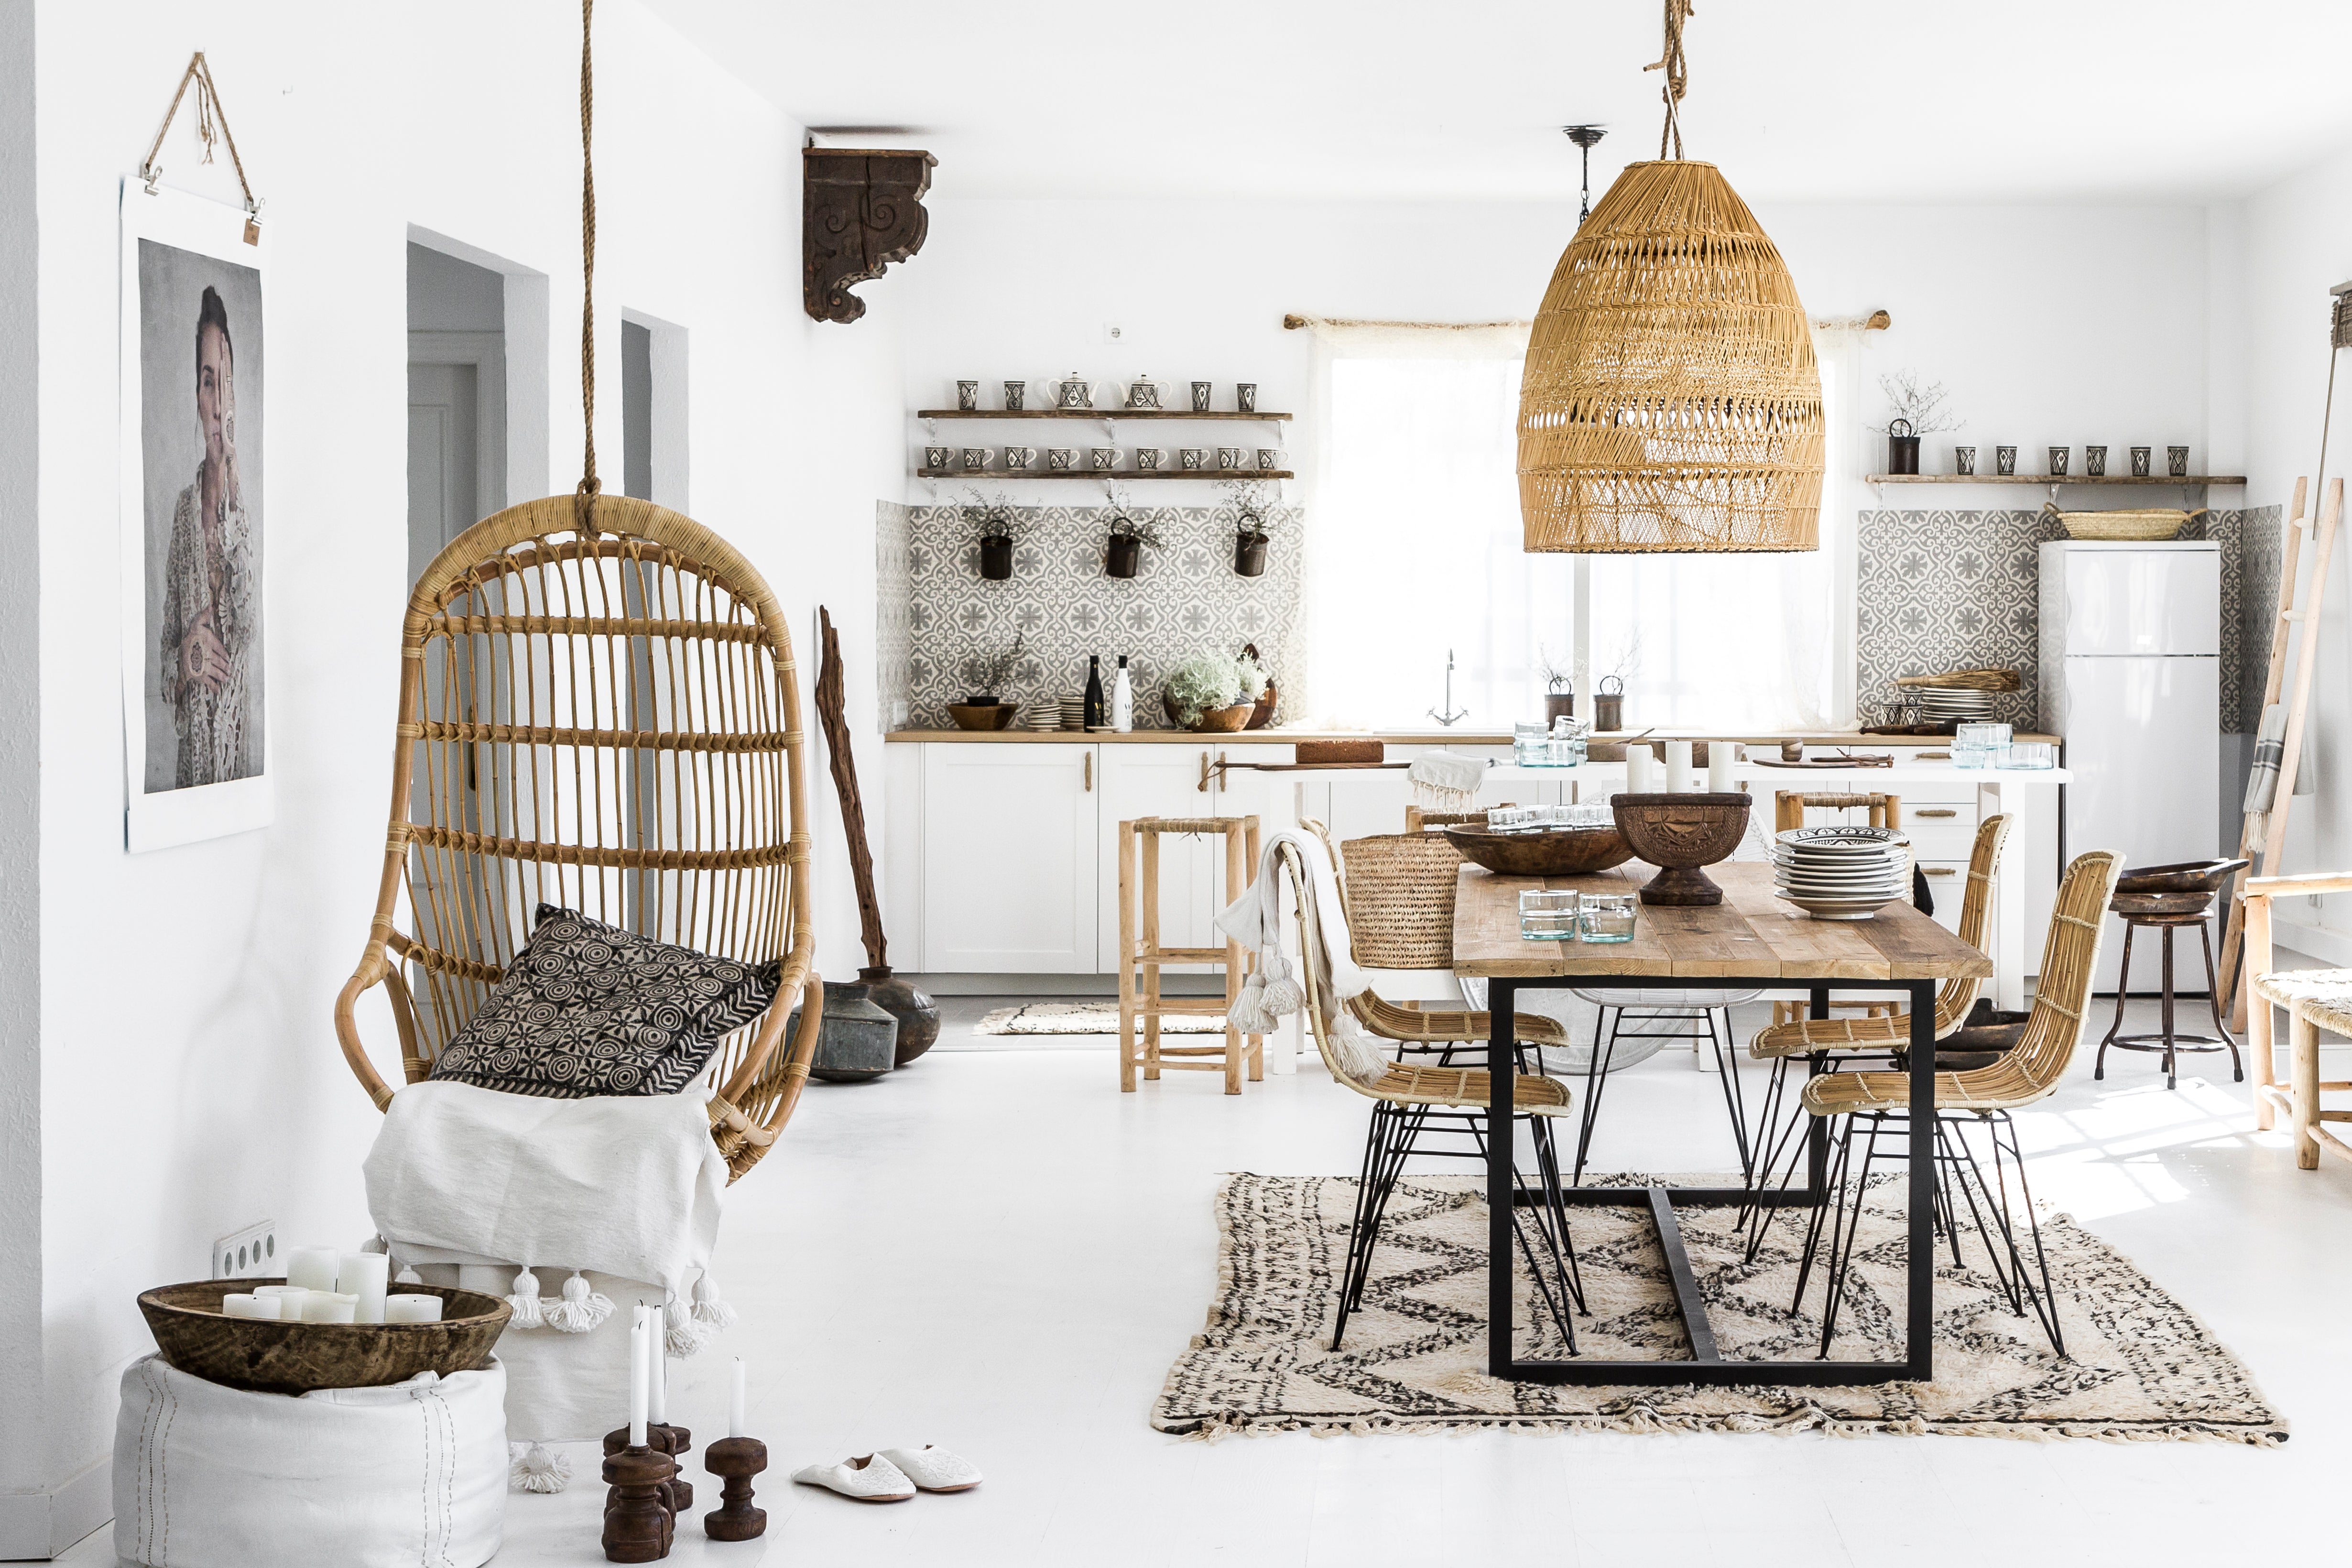 Home Makeover with Scandinavian-Boho style by Zoco Home – Zoco Home